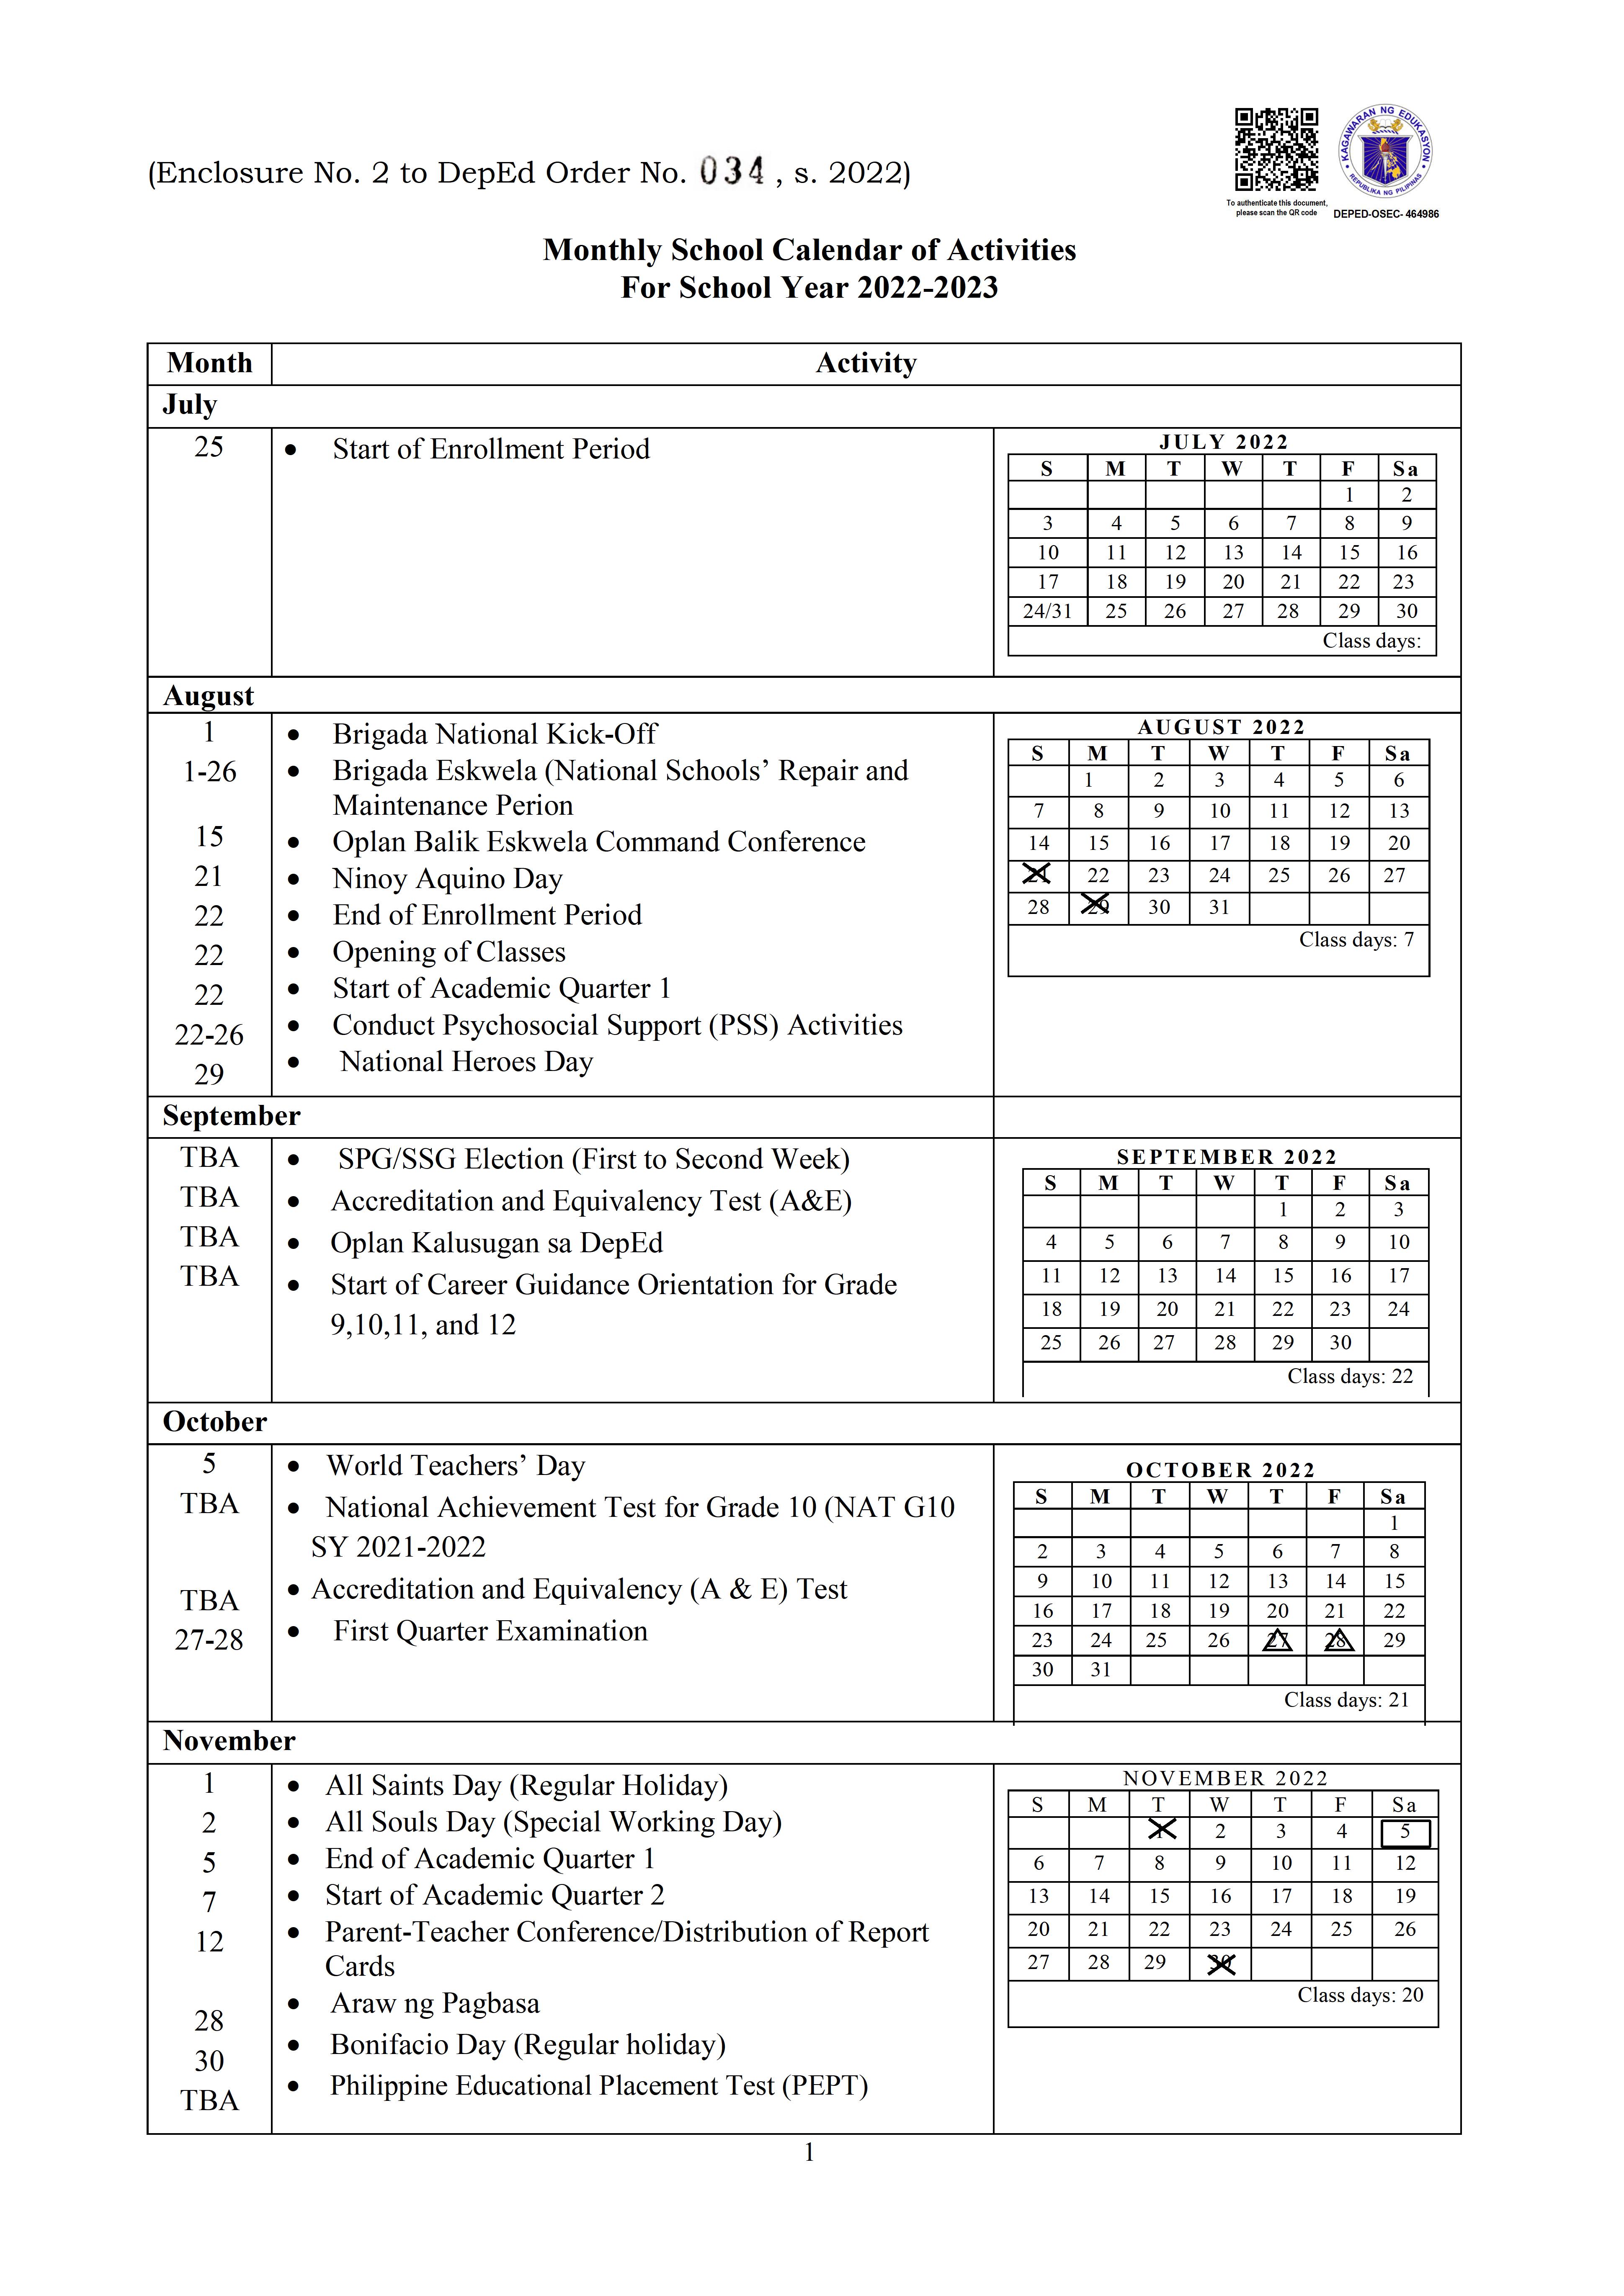 DepEd School Calendar 0014 